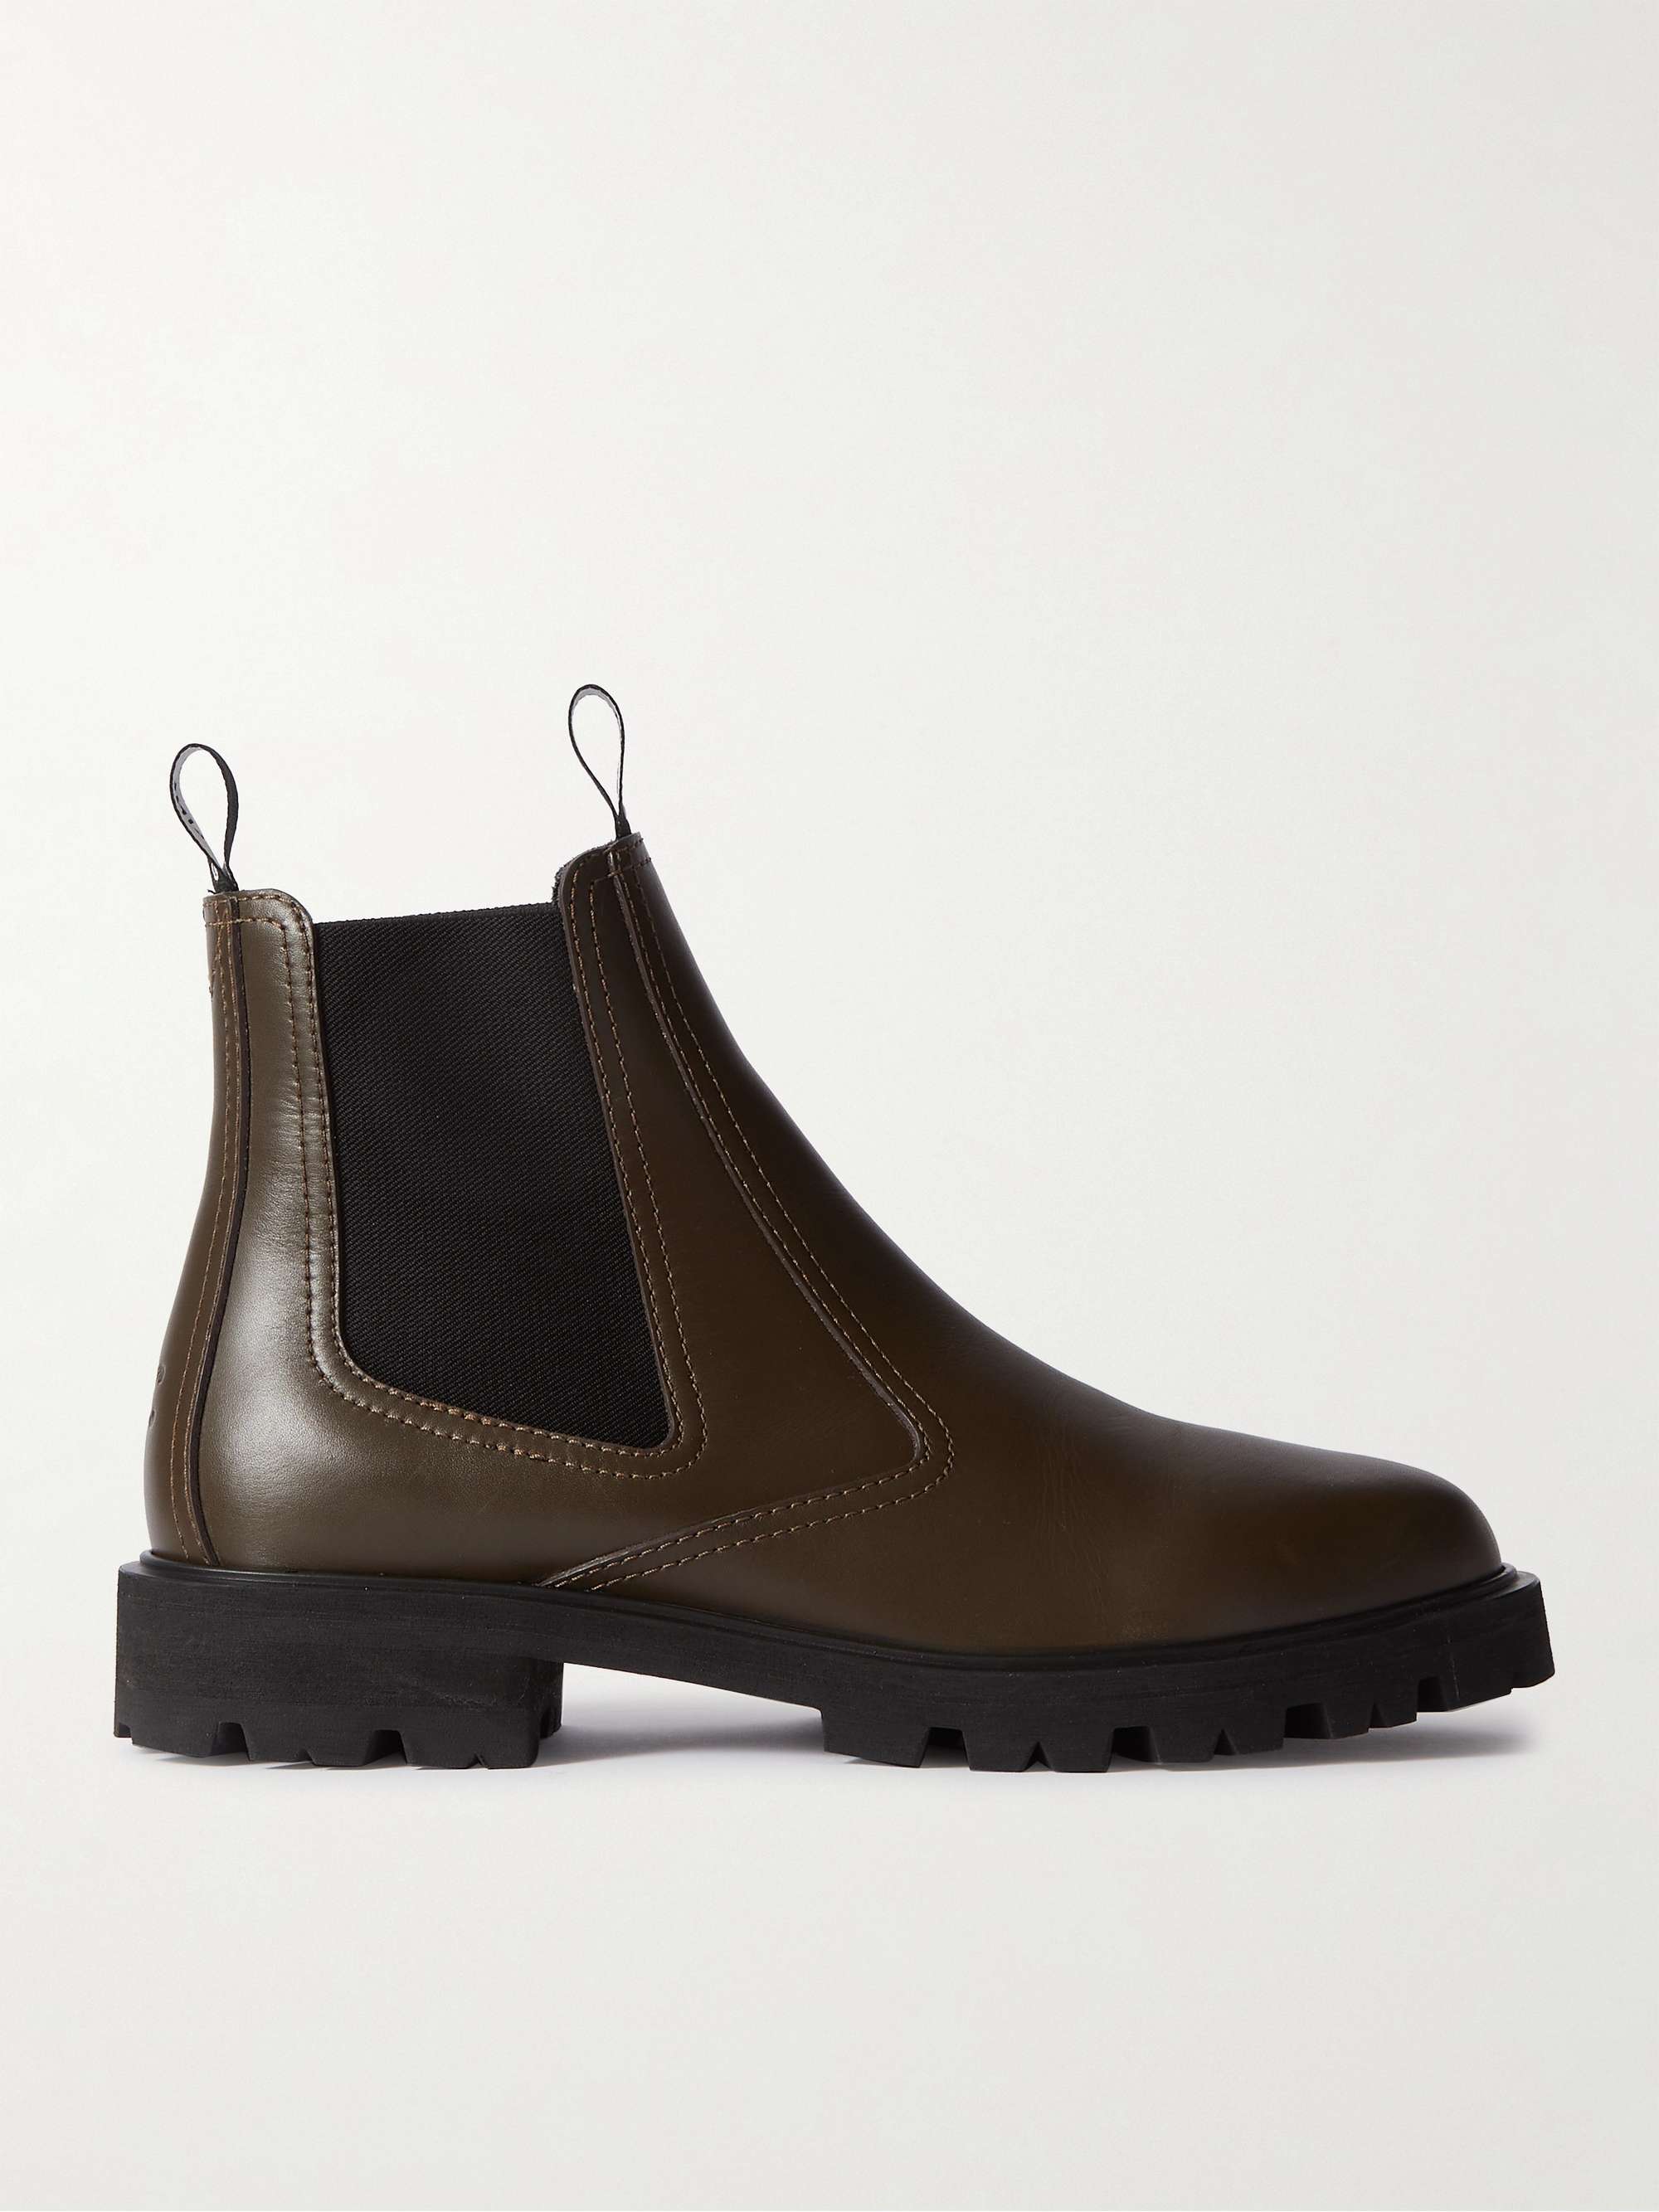 CELINE HOMME Margaret Leather Chelsea Boots for Men | MR PORTER